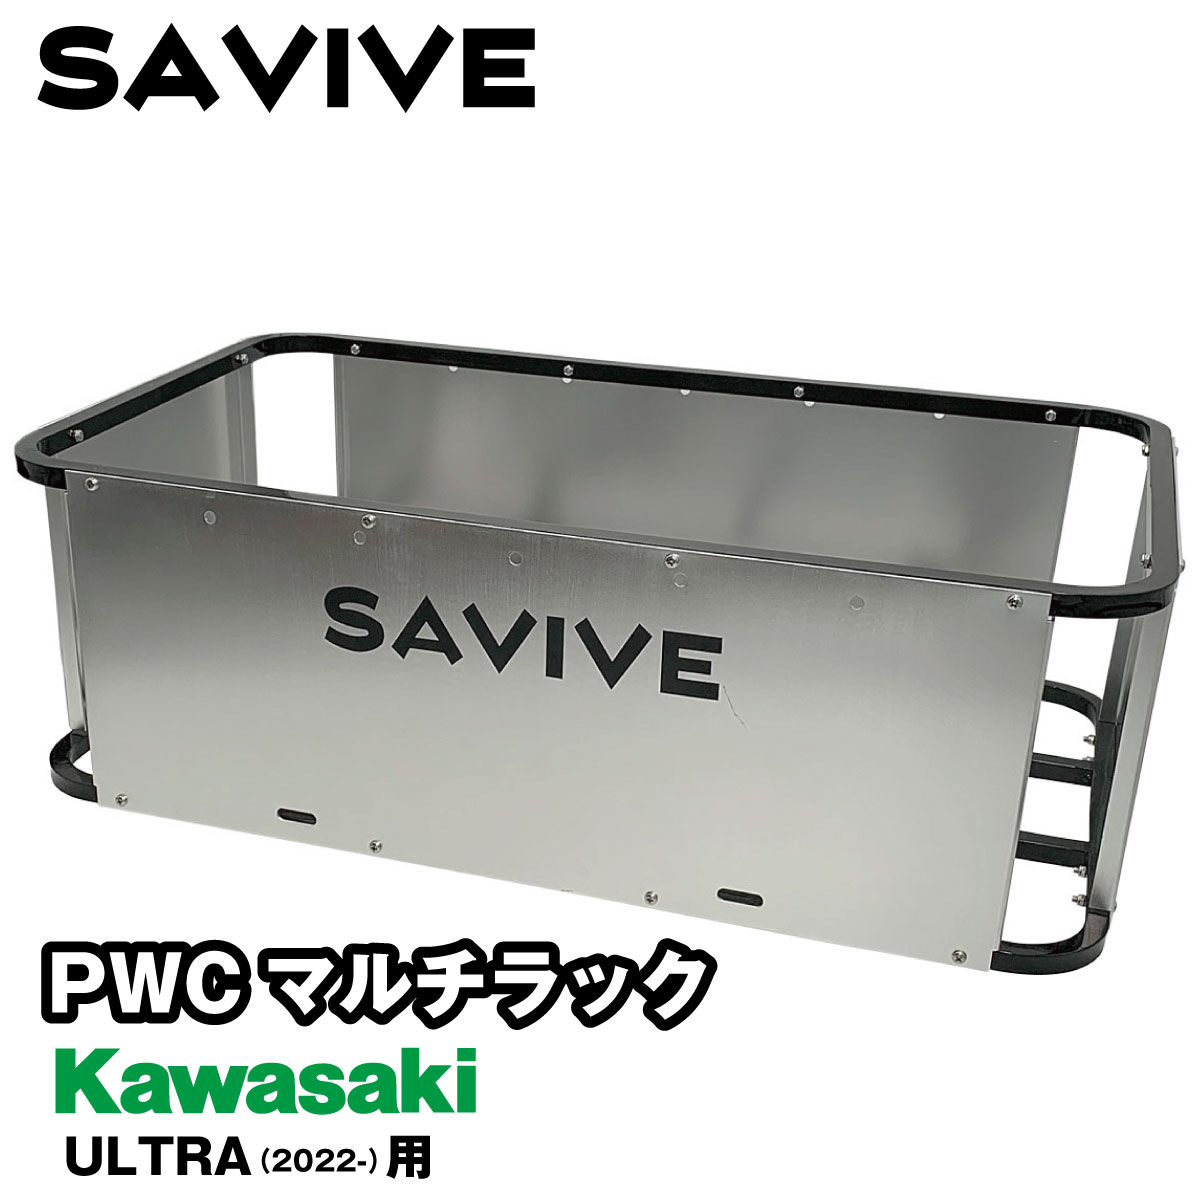 SAVIVE PWCマルチラック Kawasaki ULTRA 2022- 用 カワサキ PWCラック ジェットスキー 水上バイク 荷物入れ